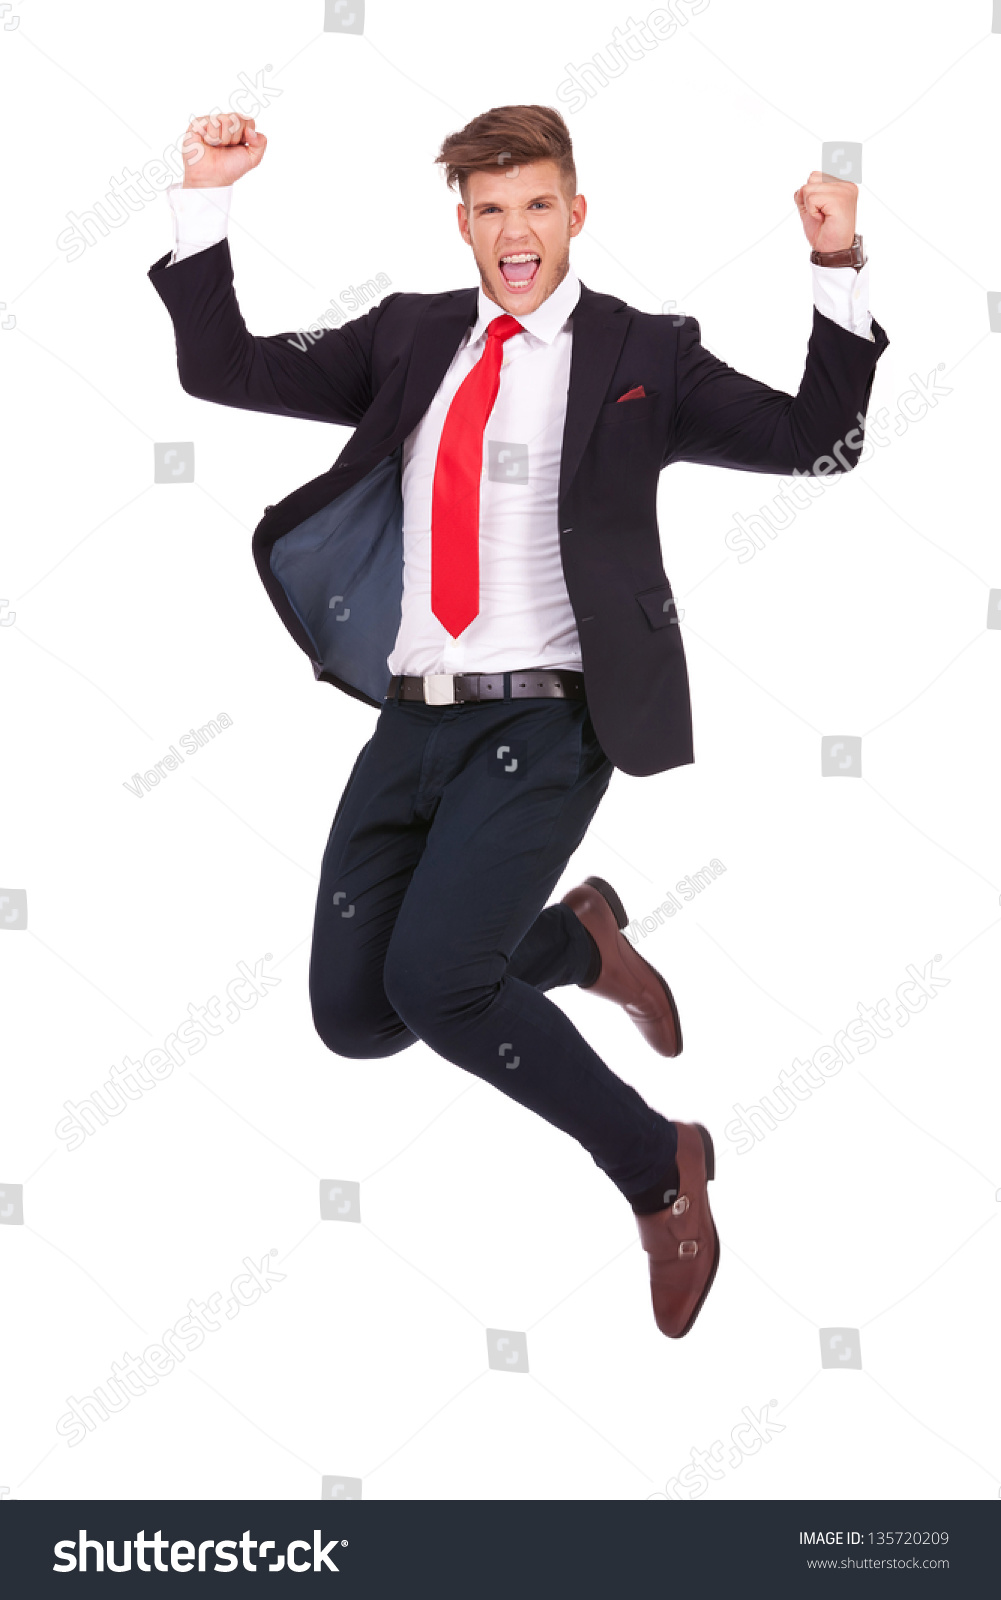 Young Business Man Jumping Air Cheering Stock Photo 135720209 ...